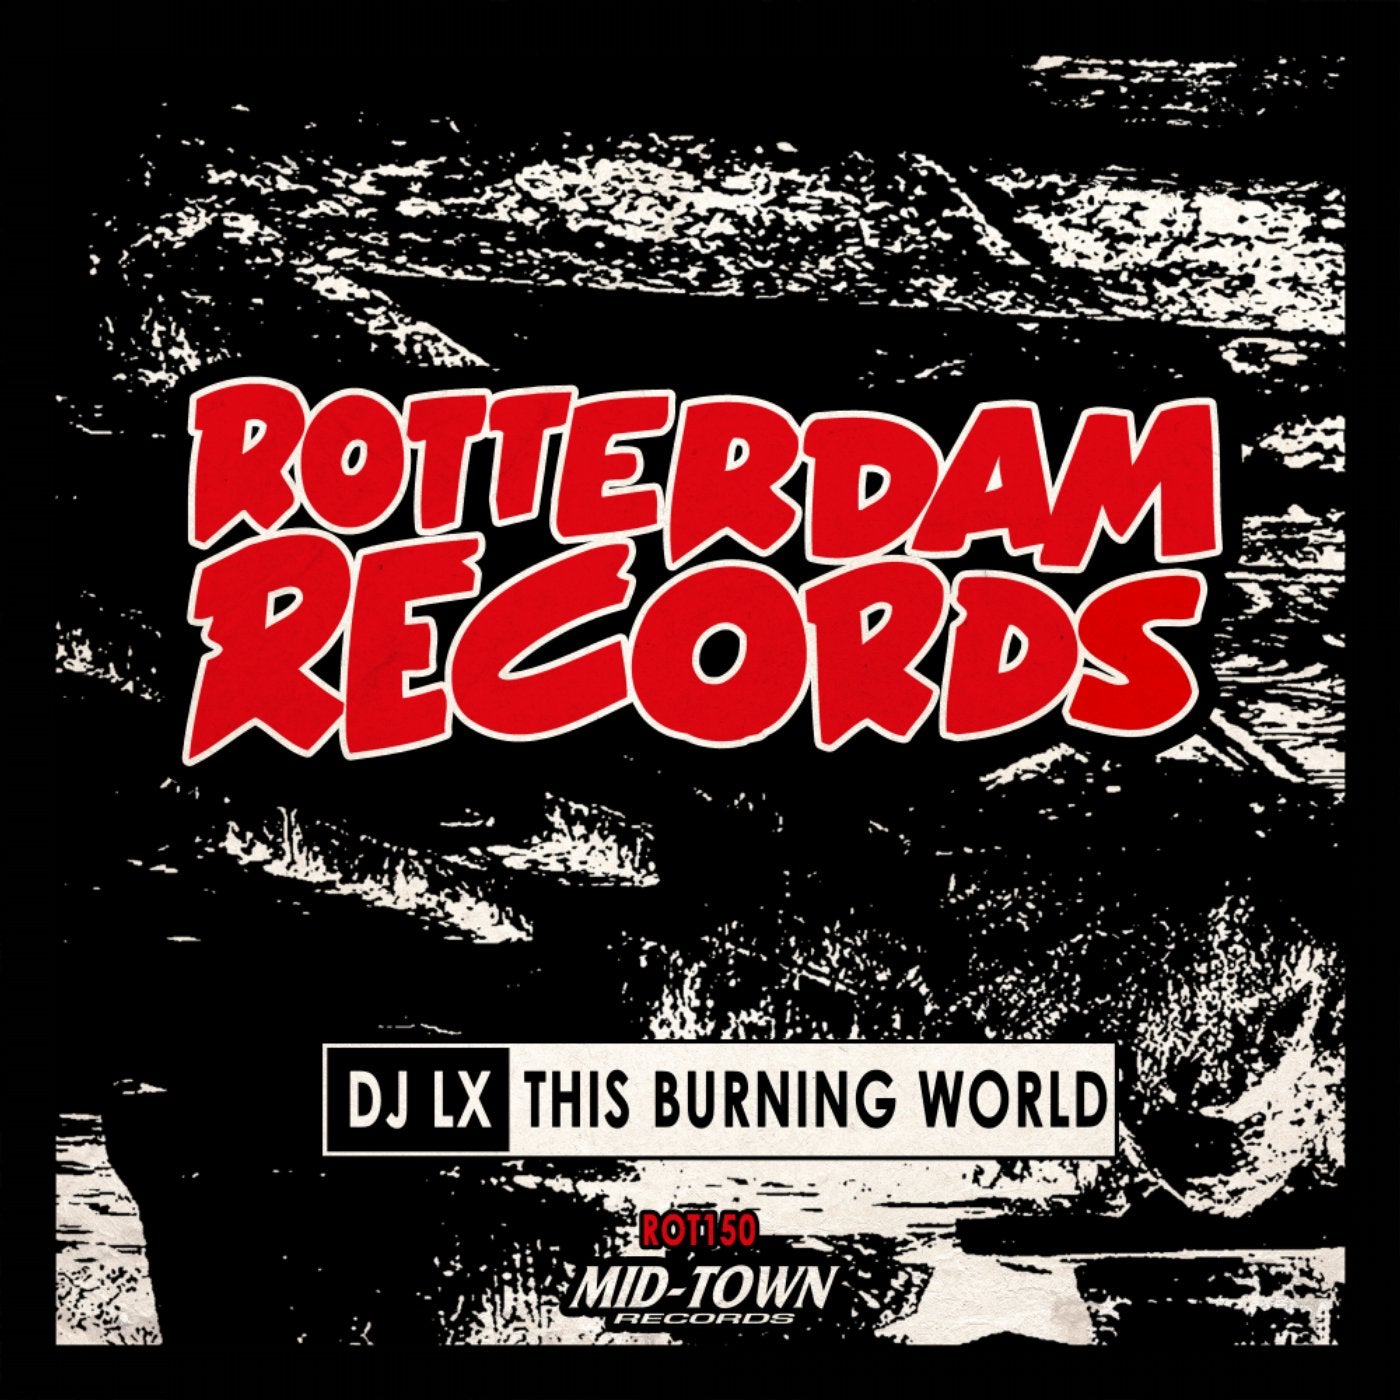 World is burning. World Ablaze. Rotterdam records.